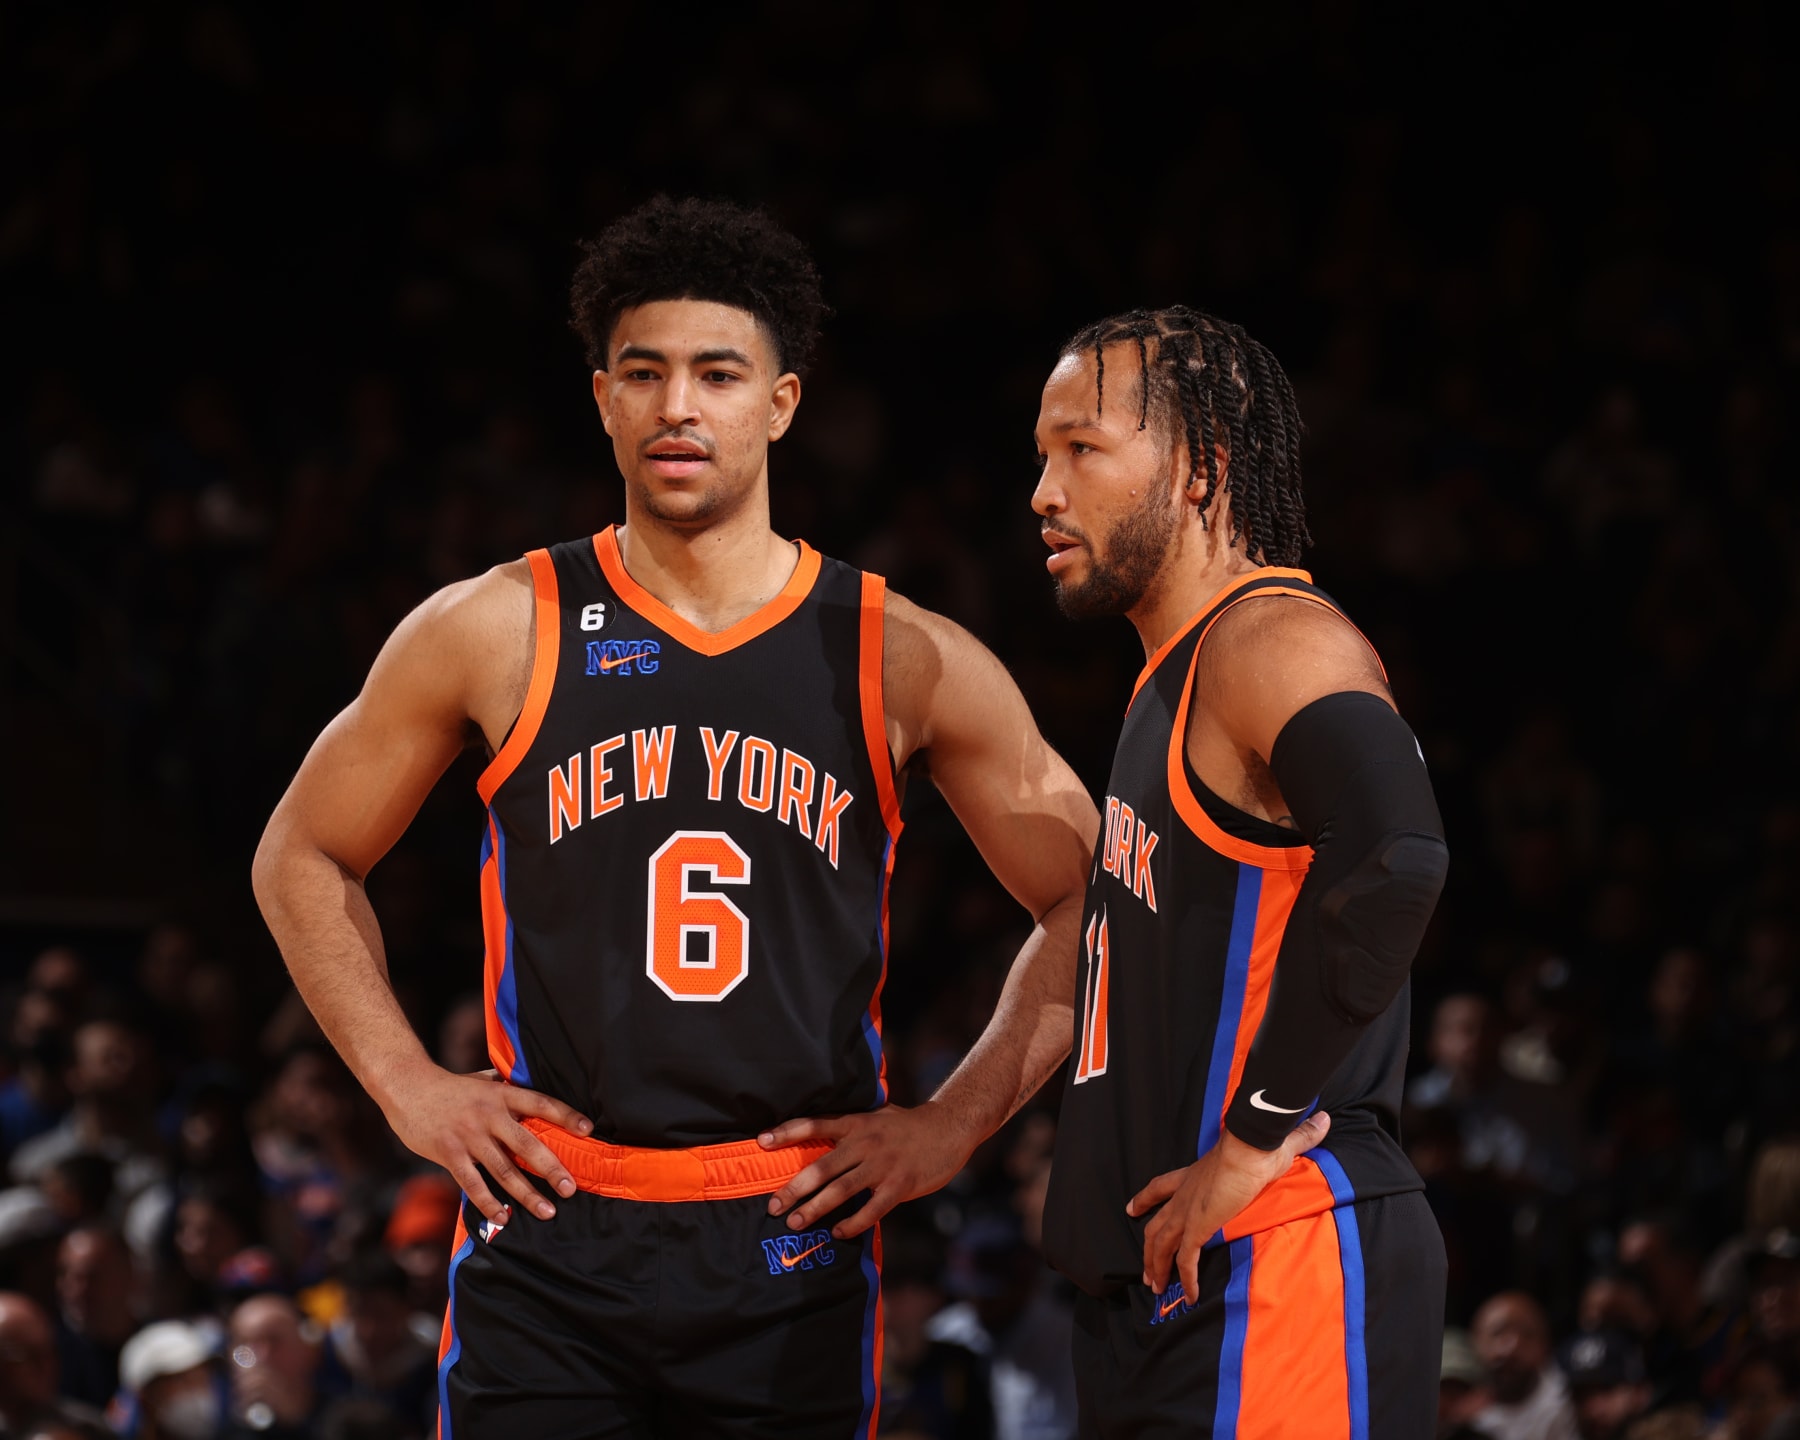 Wilt Chamberlain Jersey Worn vs. New York Knicks Makes $4.9 Million History  - Sports Illustrated New York Knicks News, Analysis and More